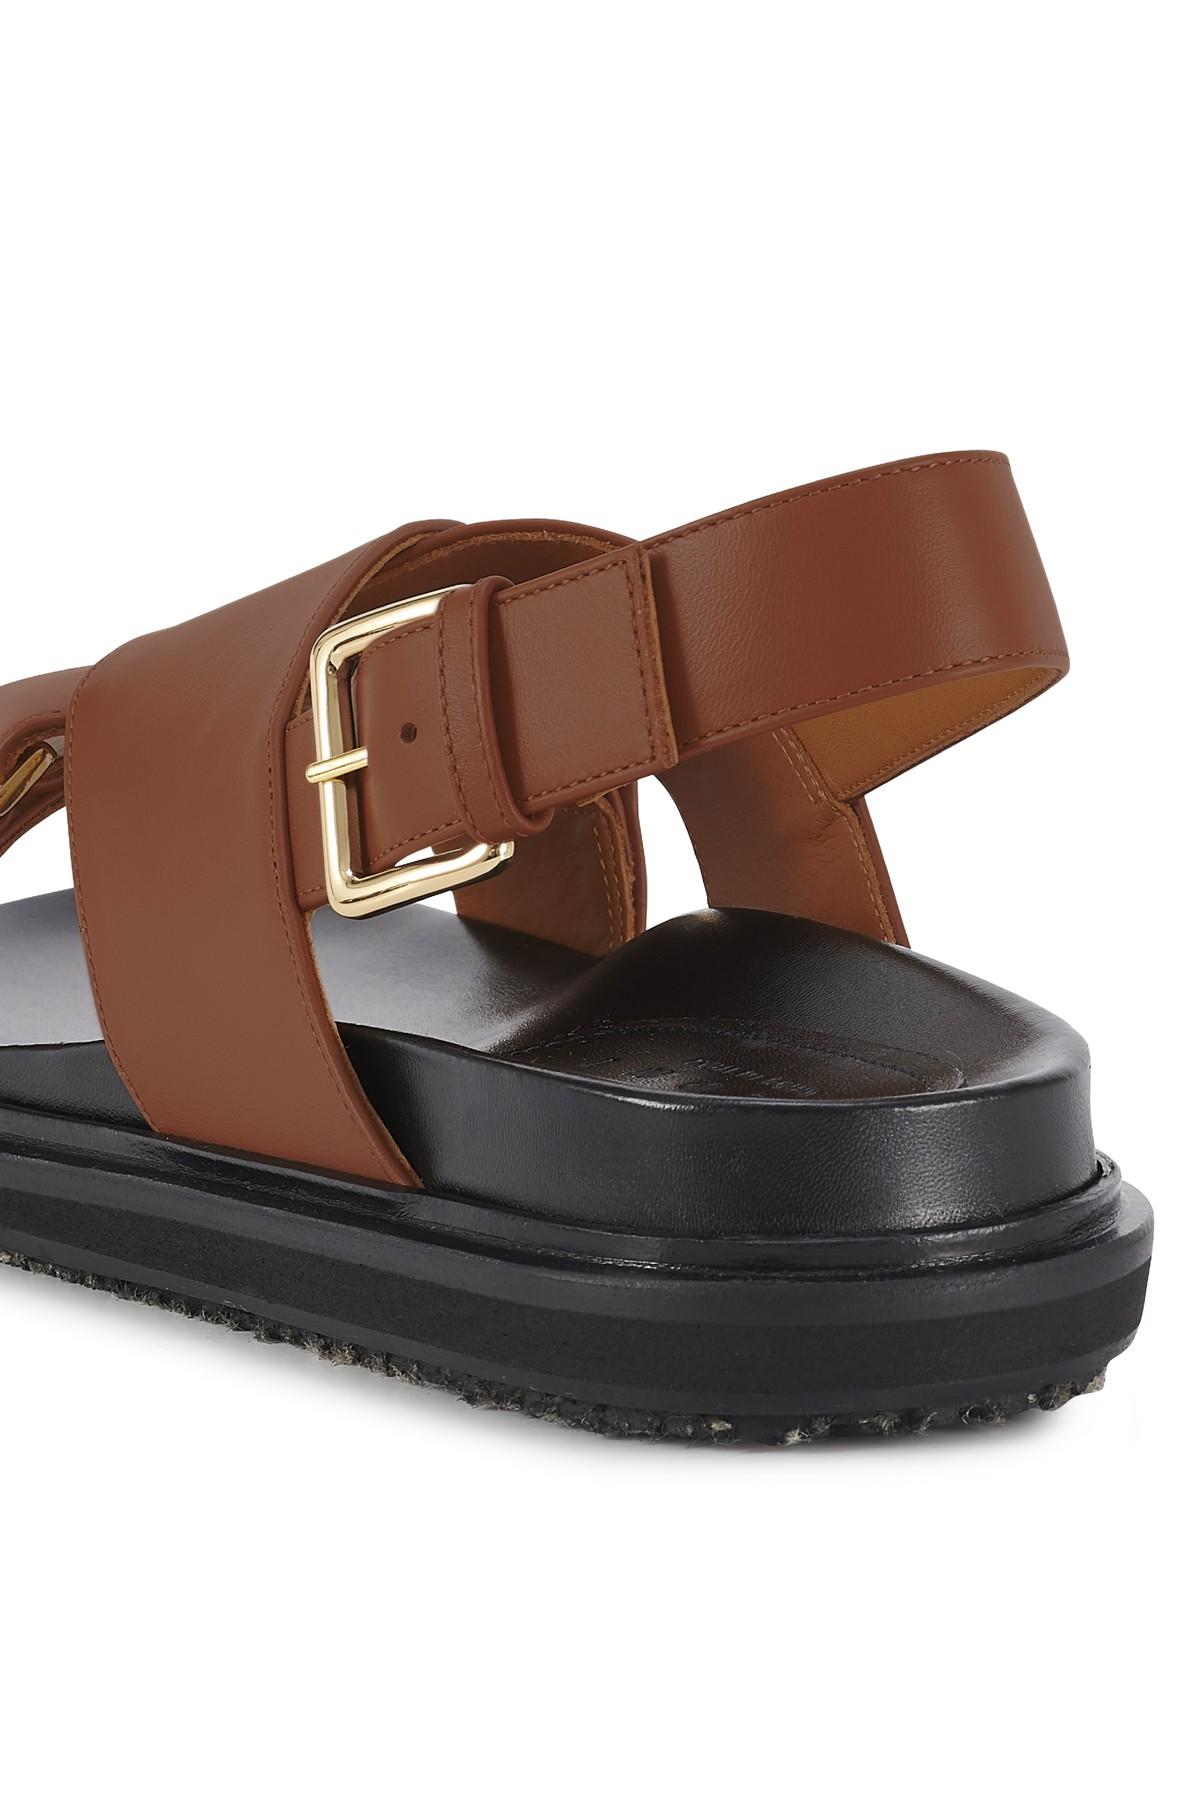 Marni Fussbett Sandals in Maroon (Brown) | Lyst